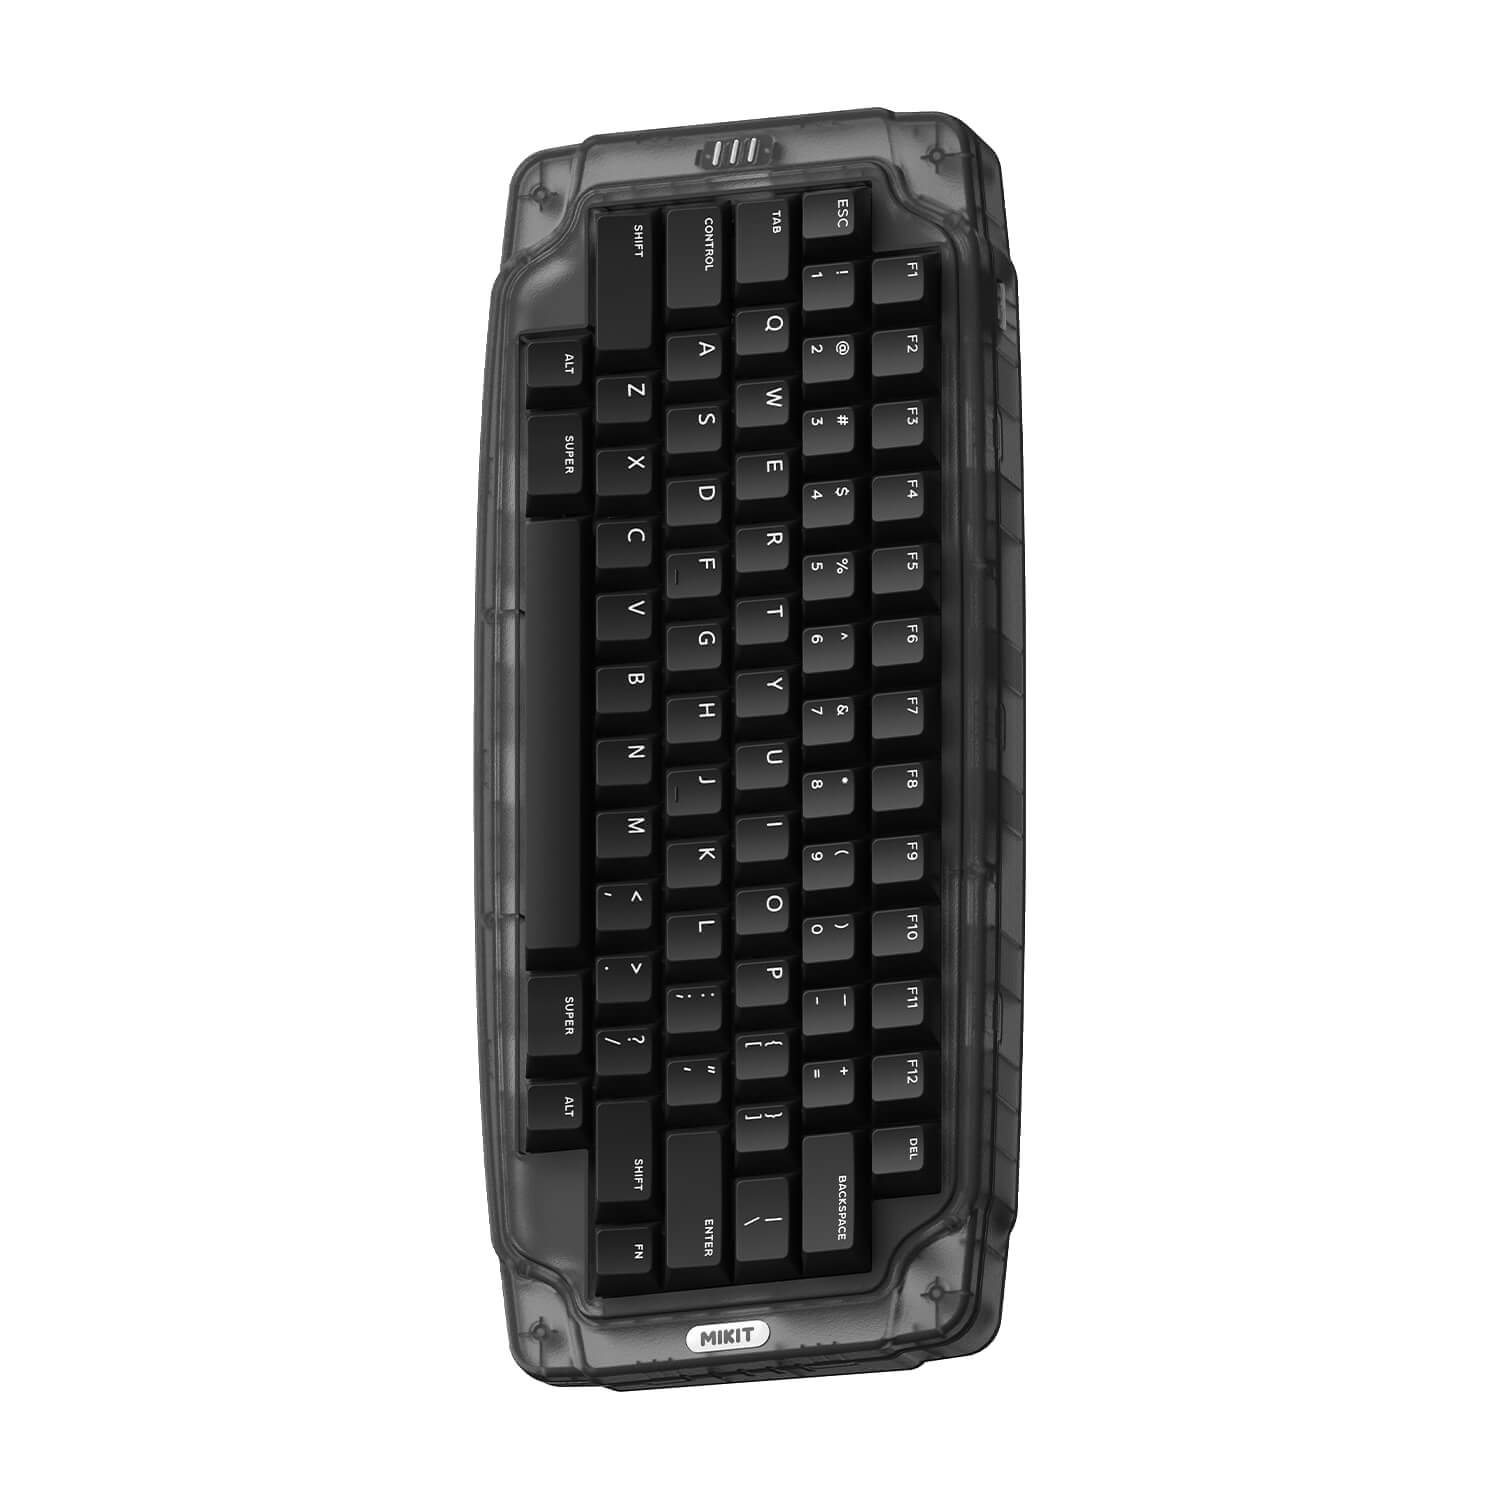 small keyboard compact keyboard 60% keyboard